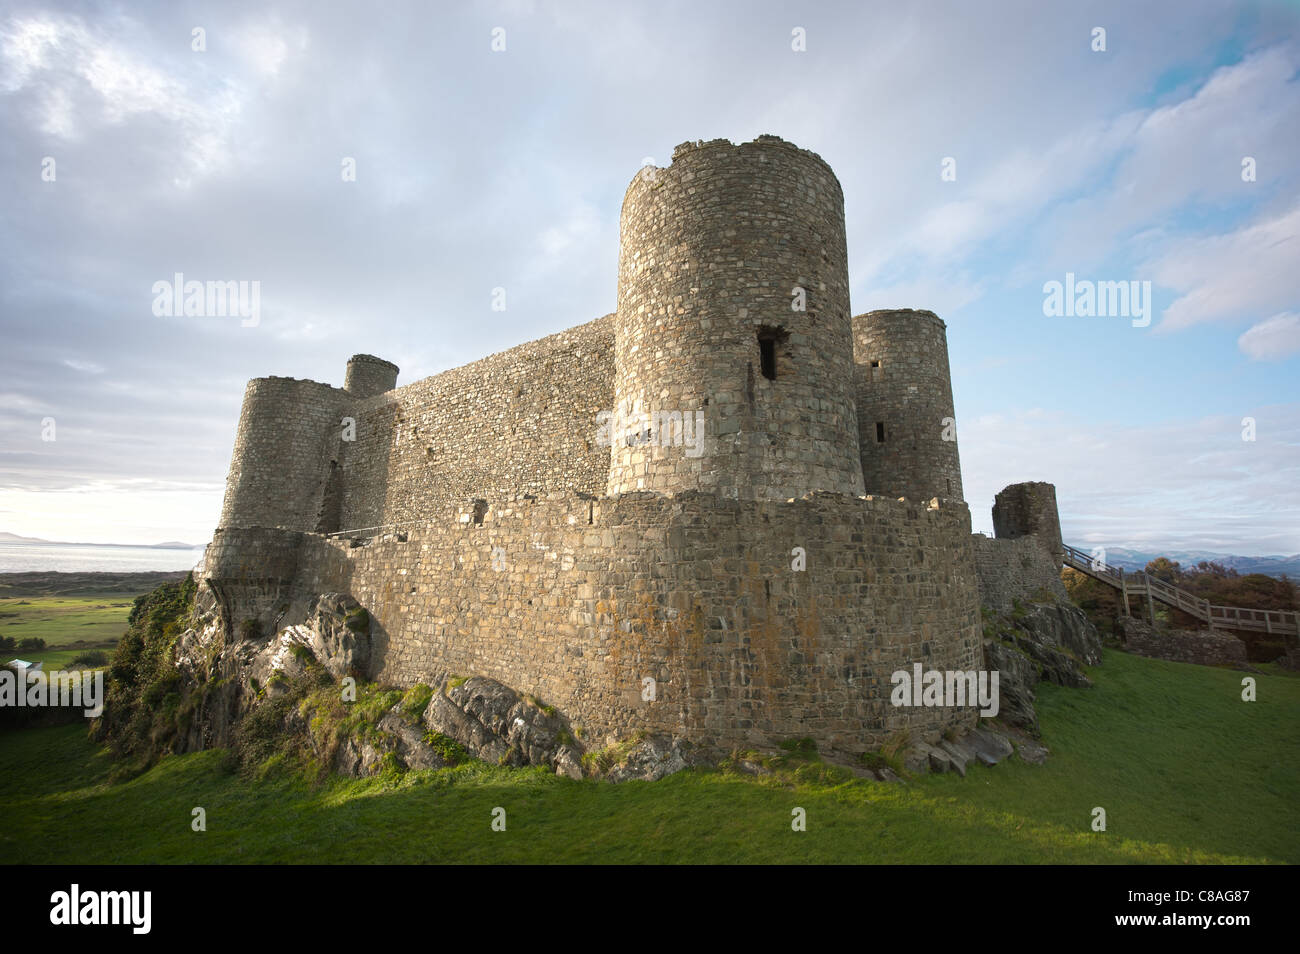 Harlech Castle located in Gwynedd, Wales. Built by Kind Edward I. Stock Photo